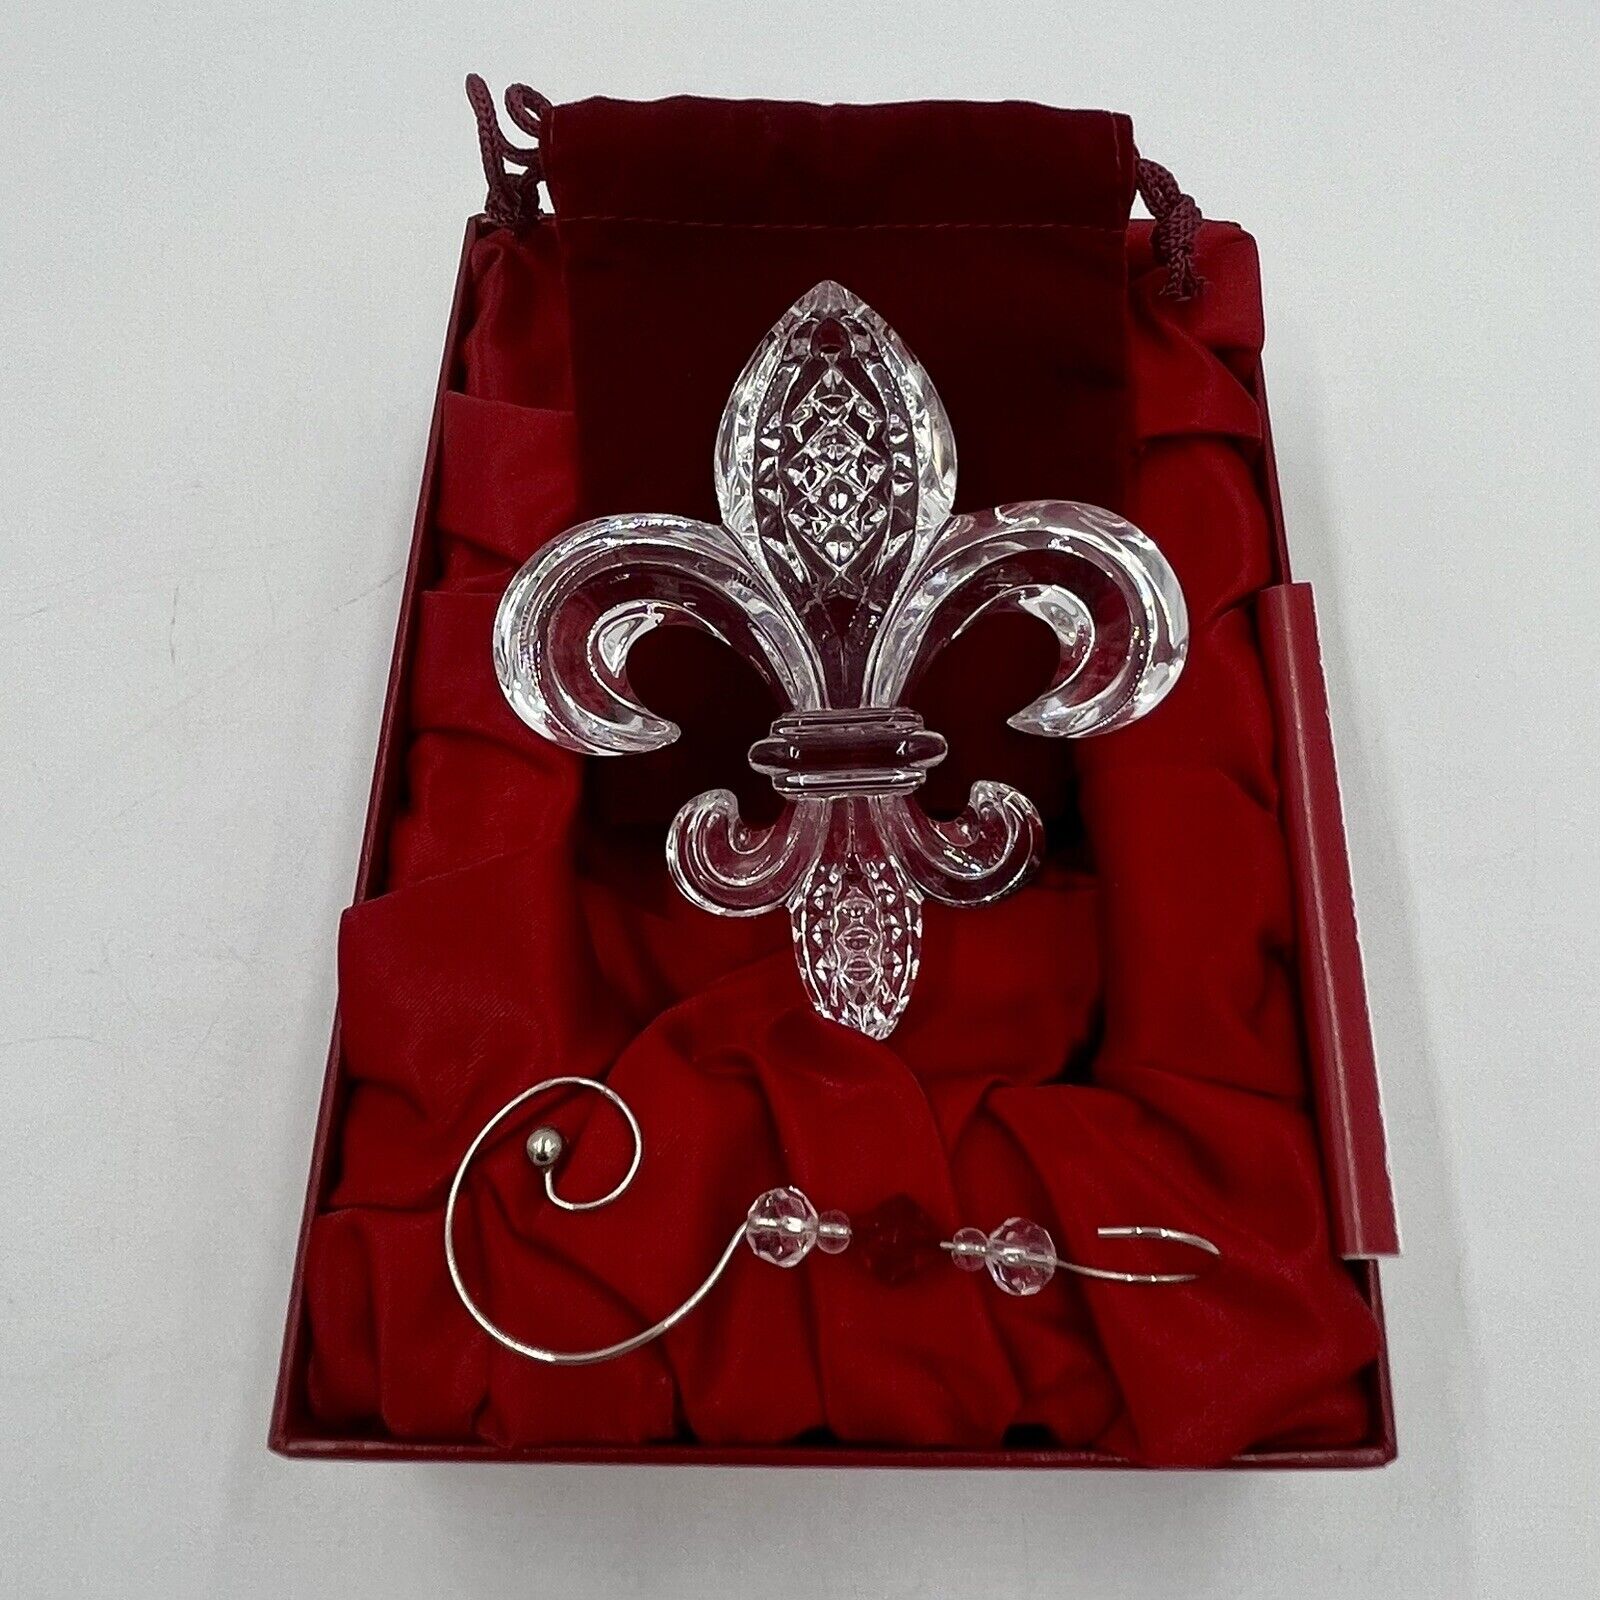 WATERFORD CRYSTAL Fleur-de-Lis Ornament with Enhancer 2012 Original Packaging